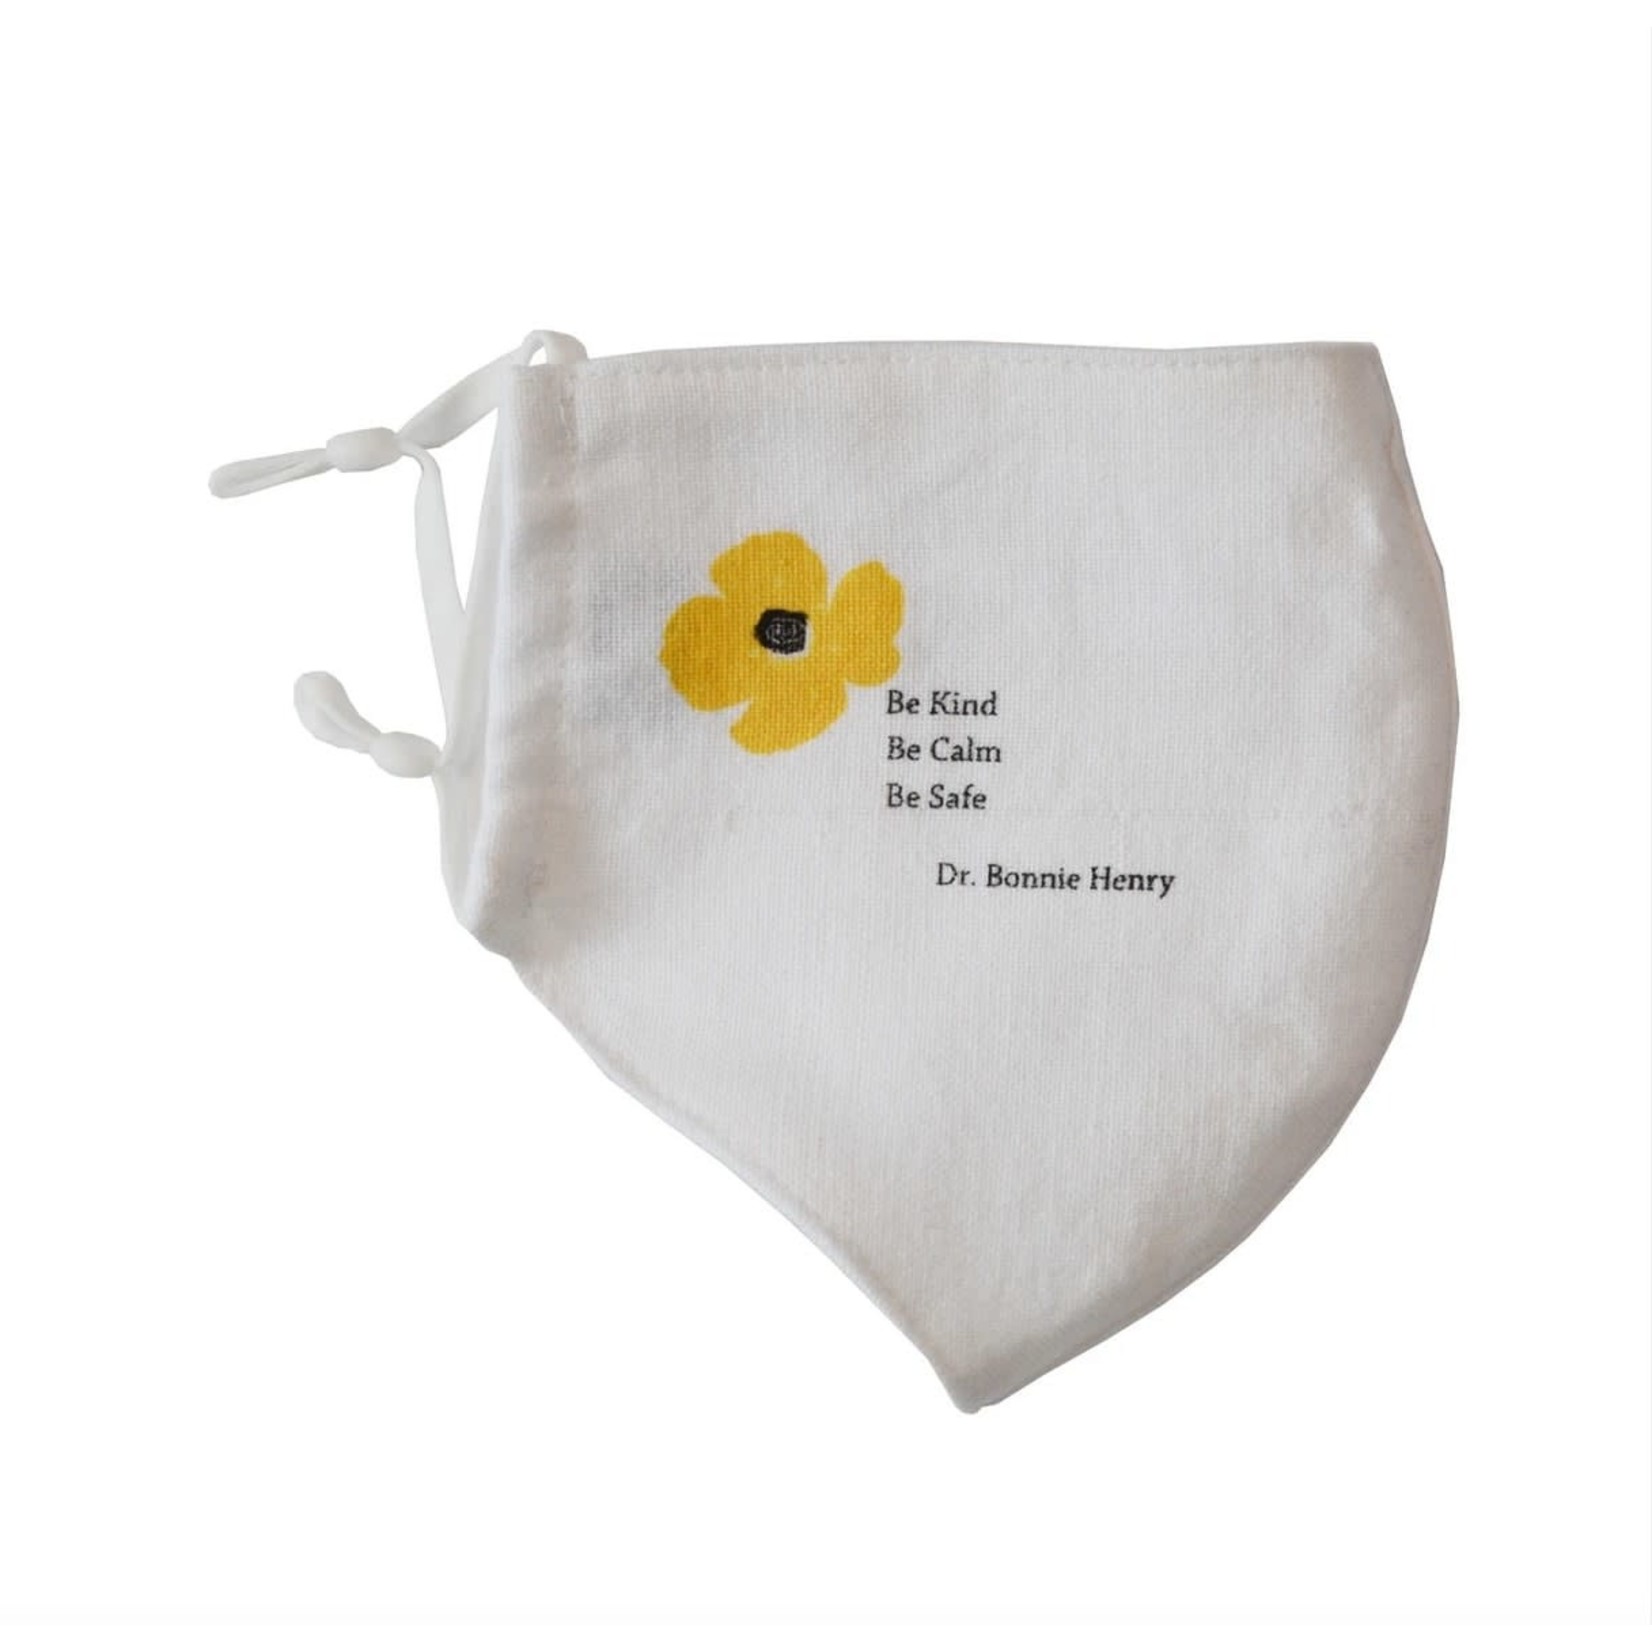 RAIN GOOSE RAIN GOOSE Dr. Bonnie Henry Yellow Flower Face Mask - Cotton / Linen Lining REG $17.99 DNR